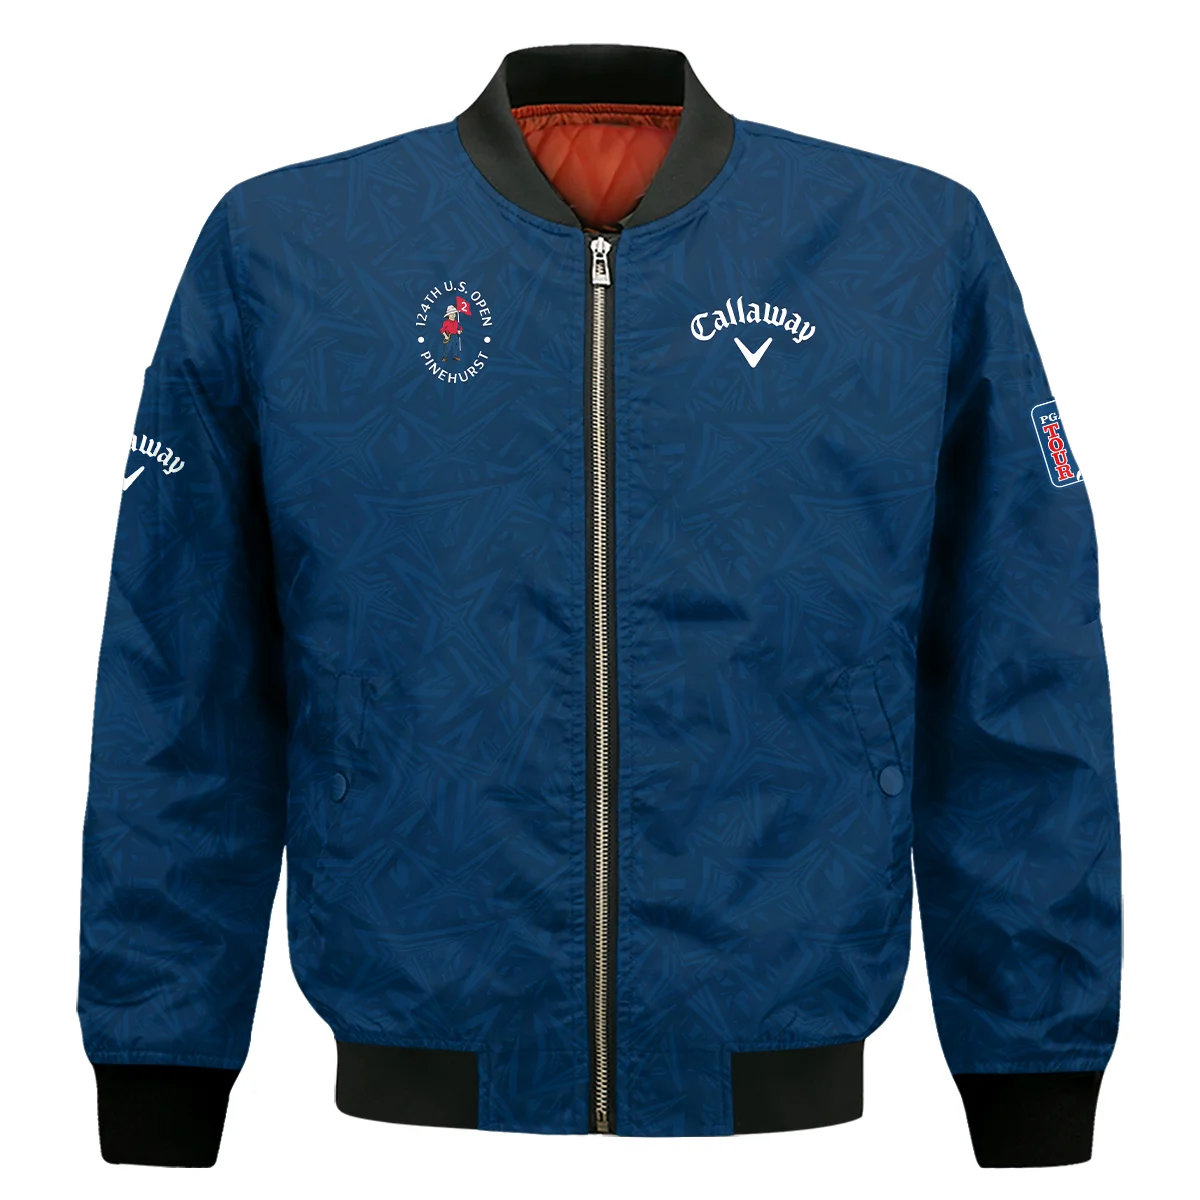 Callaway 124th U.S. Open Pinehurst Stars Gradient Pattern Dark Blue Unisex Sweatshirt Style Classic Sweatshirt